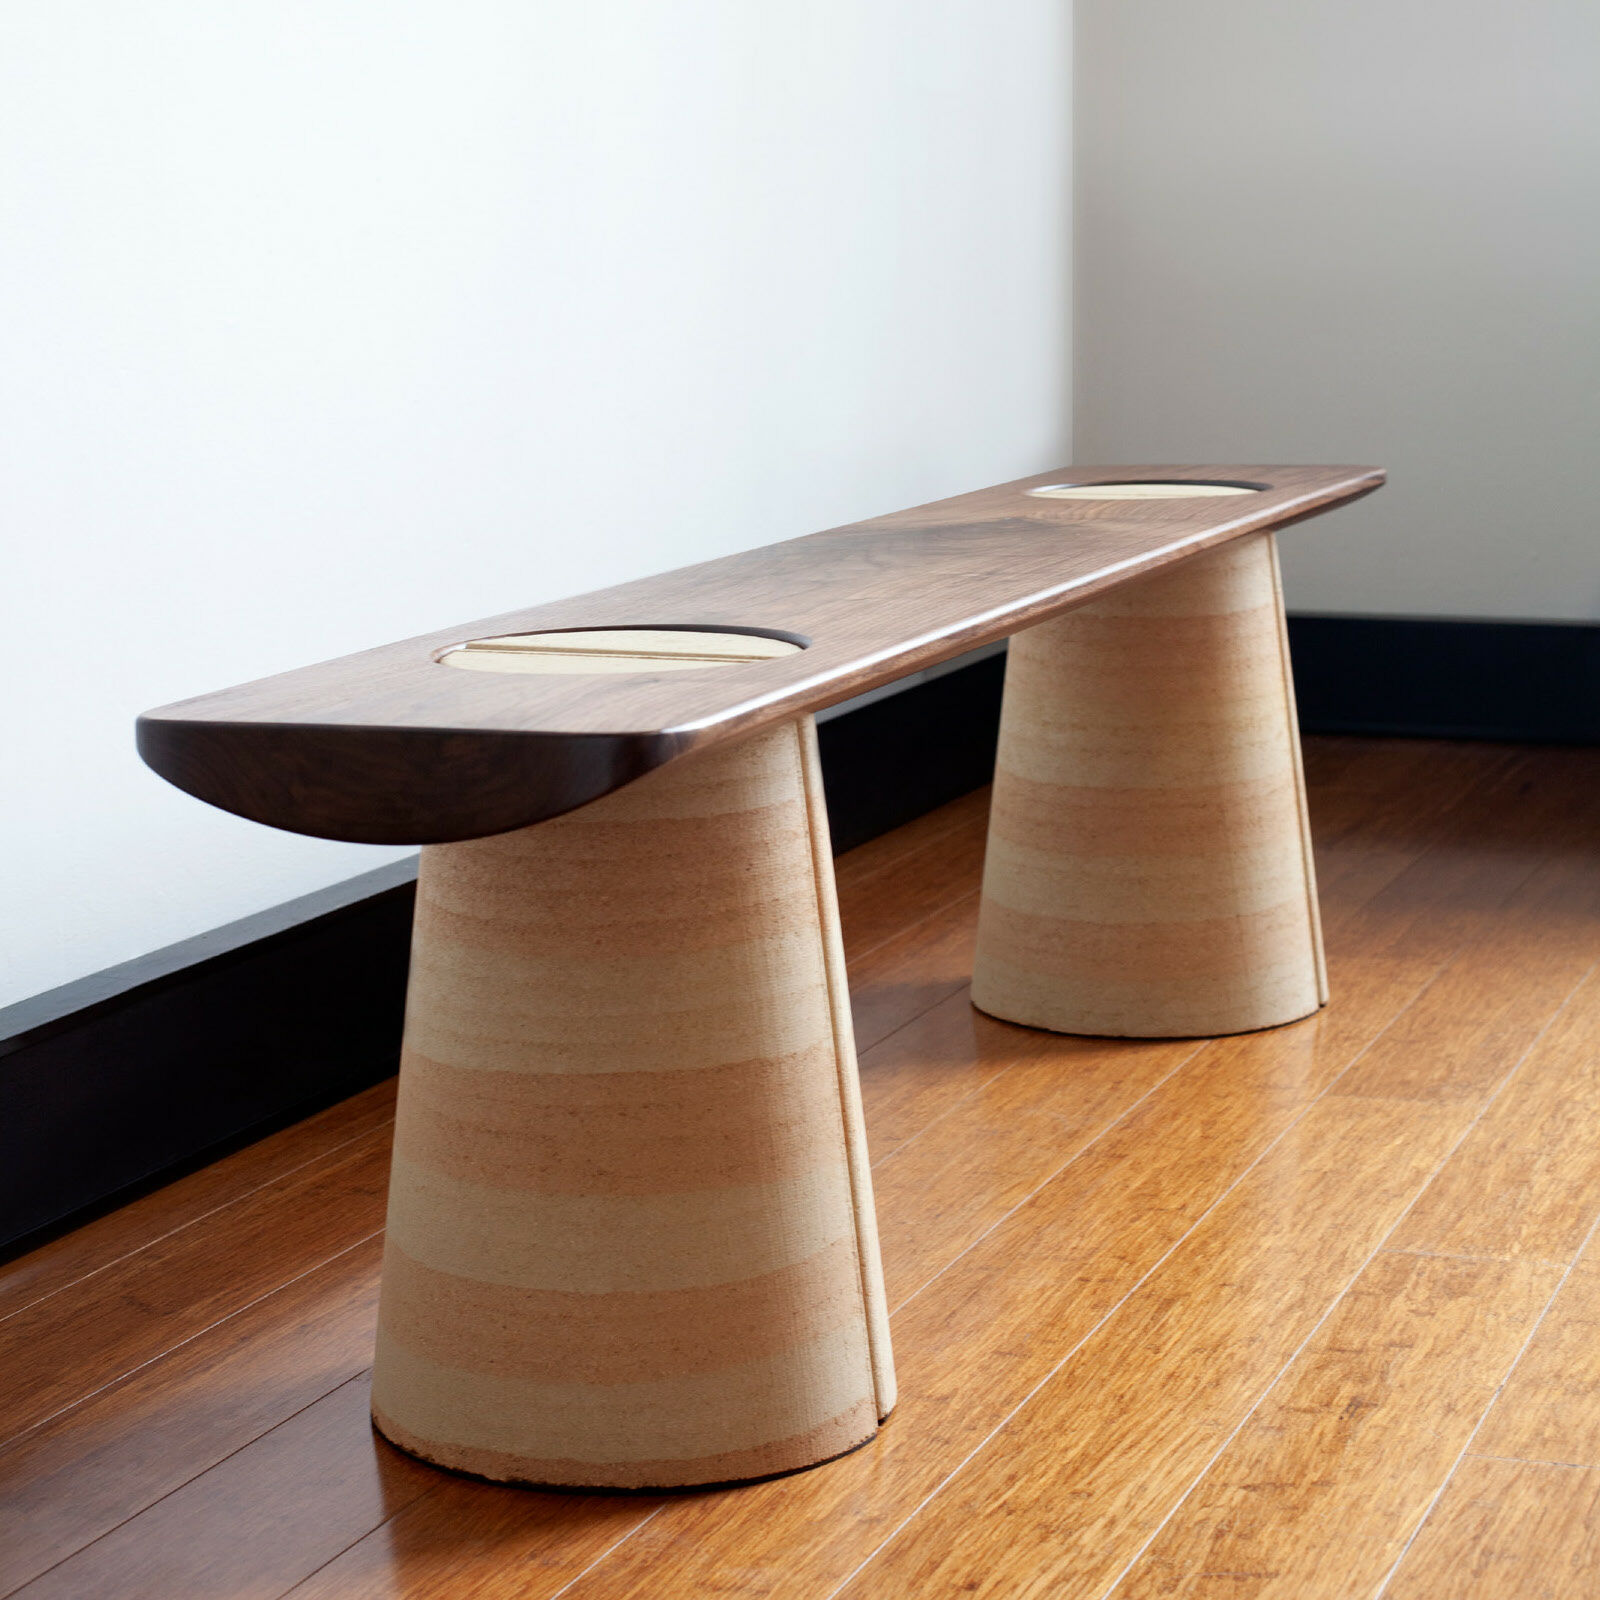 Australian Furniture Design Awards 2020